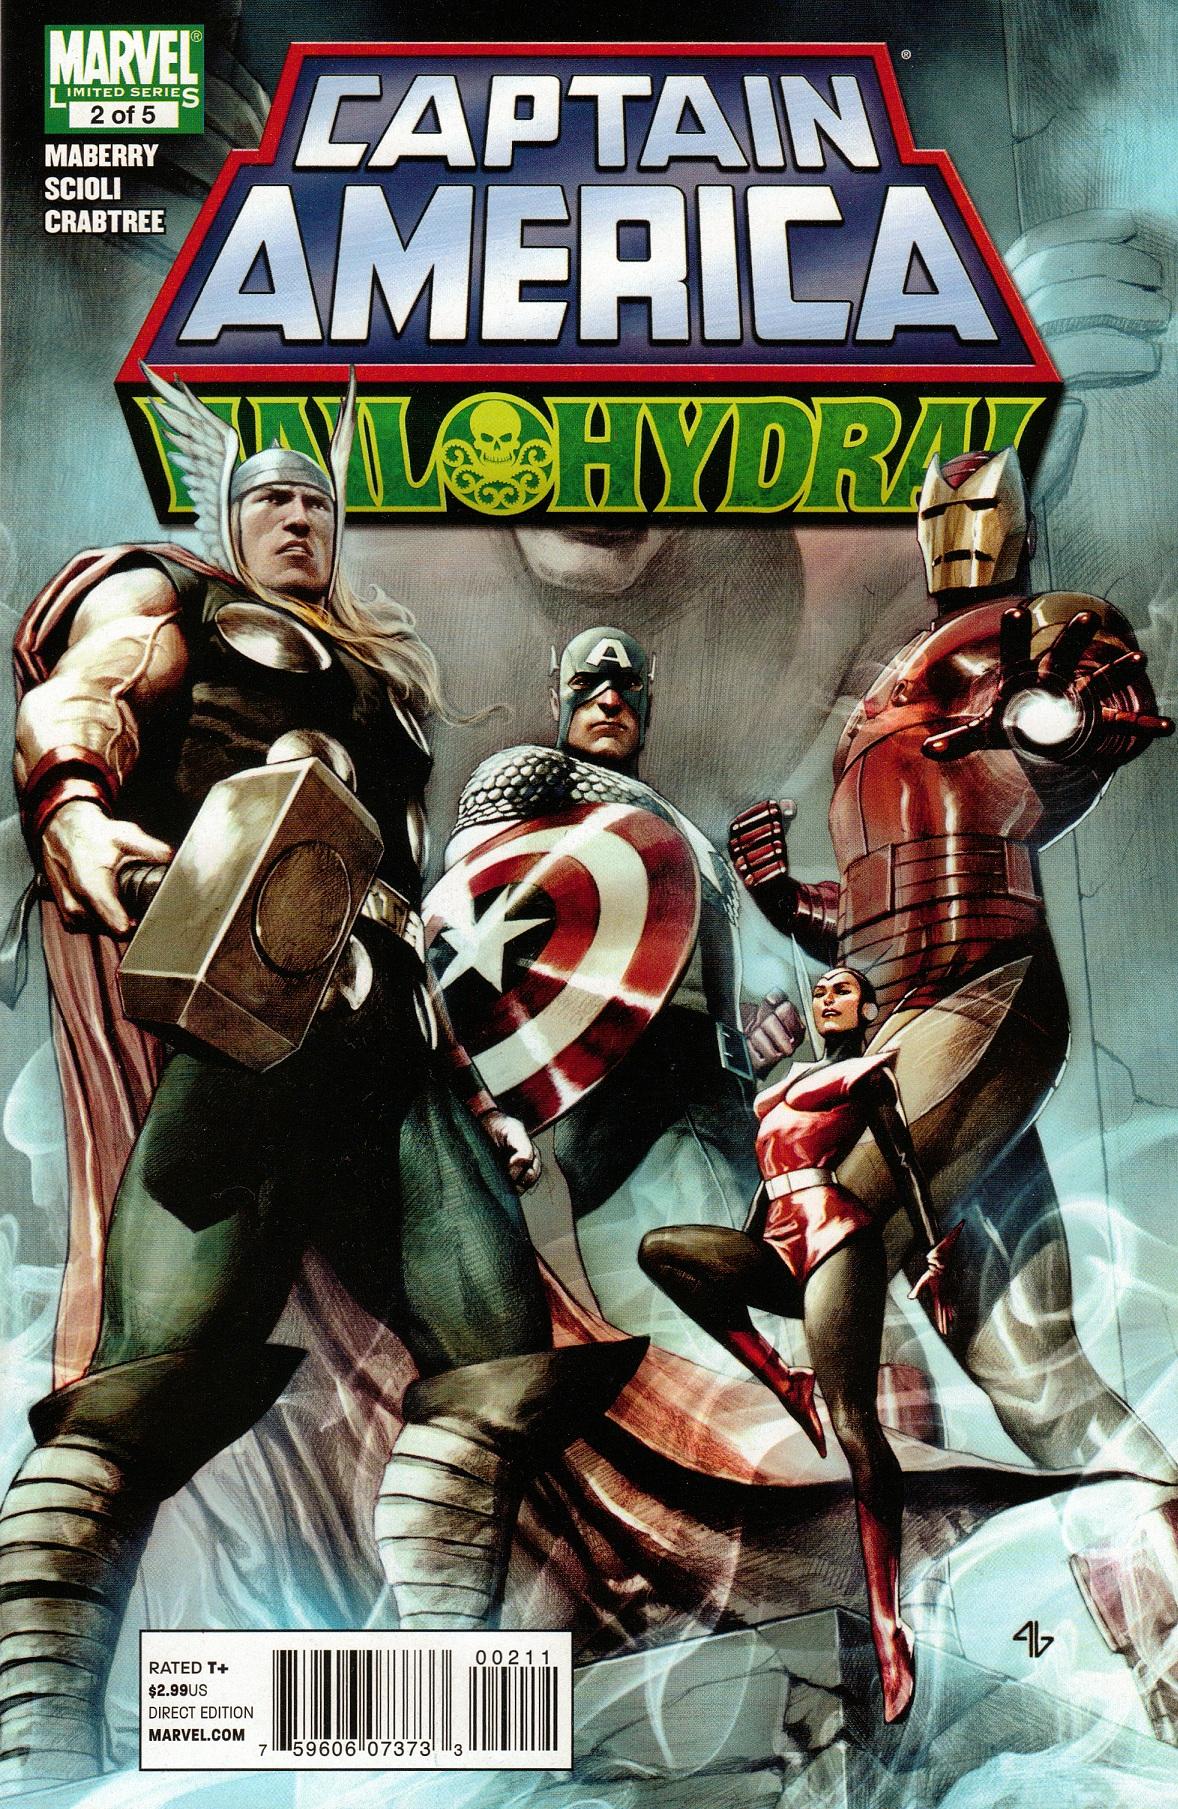 Captain America: Hail Hydra Vol. 1 #2